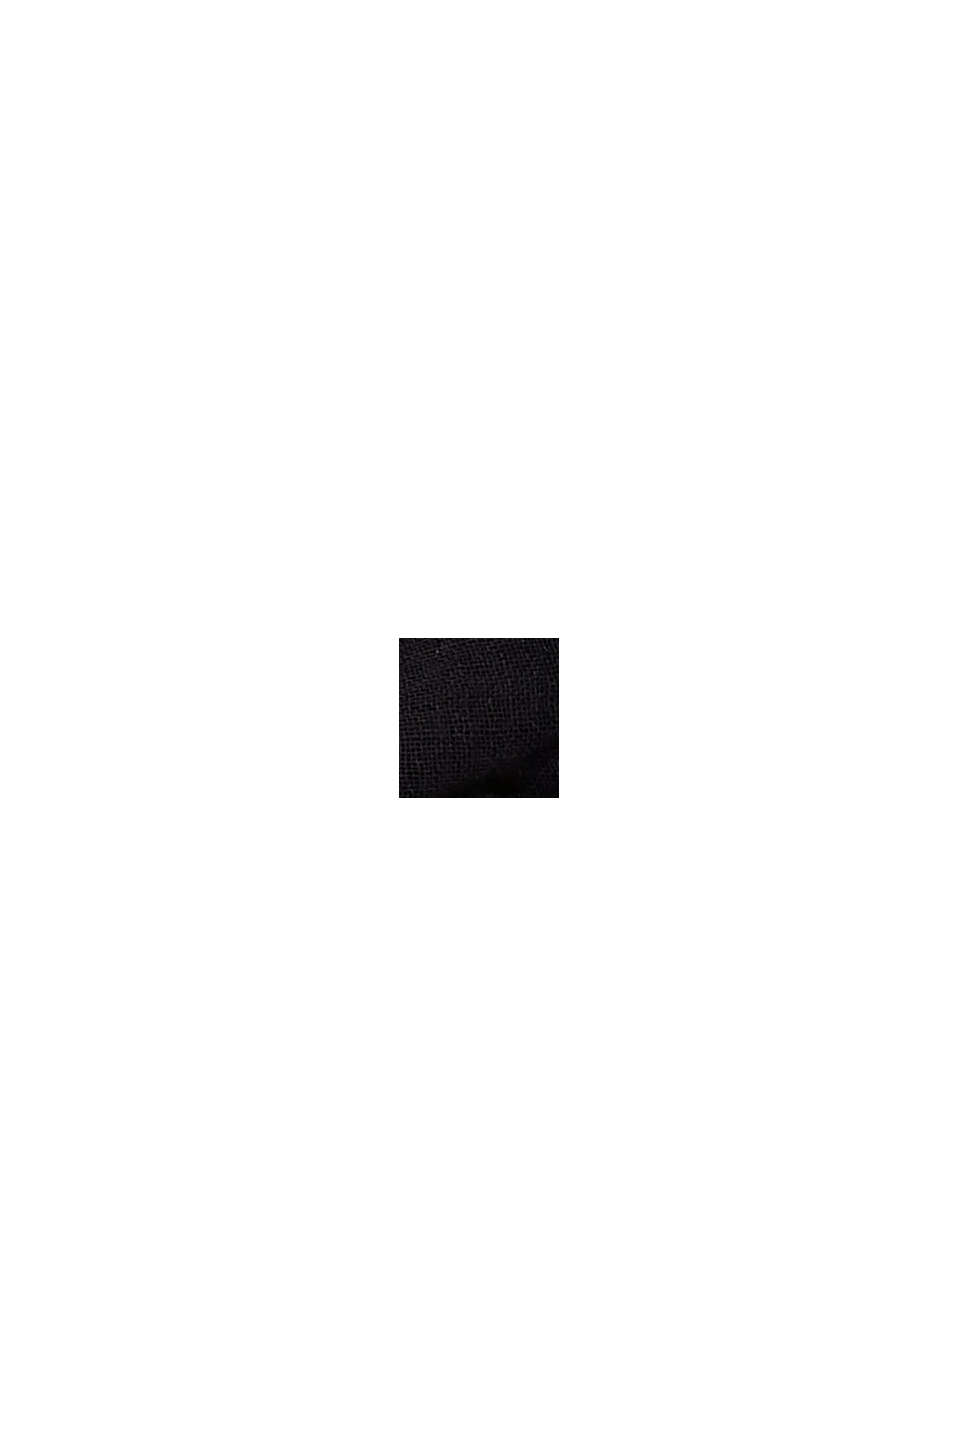 En lana/seda: Pañuelo con lentejuelas, BLACK, swatch